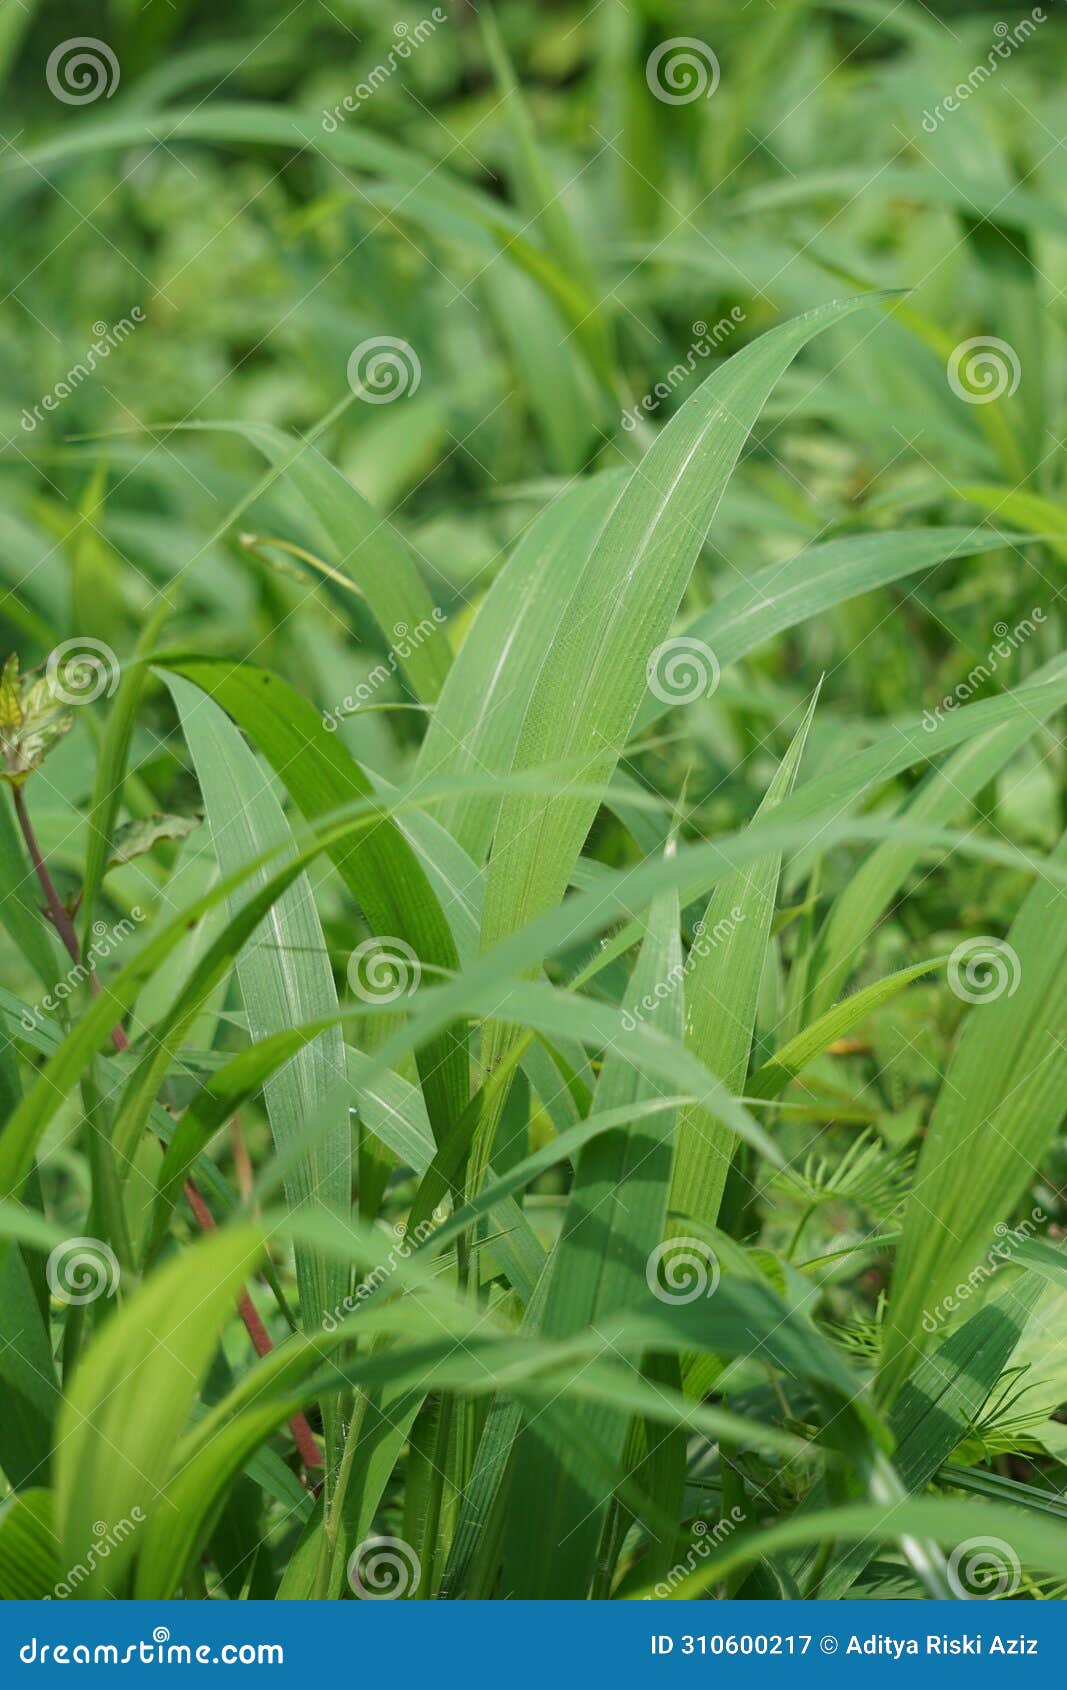 setaria palmifolia (rumput setaria, jamarak, palmgrass, highland) grass.